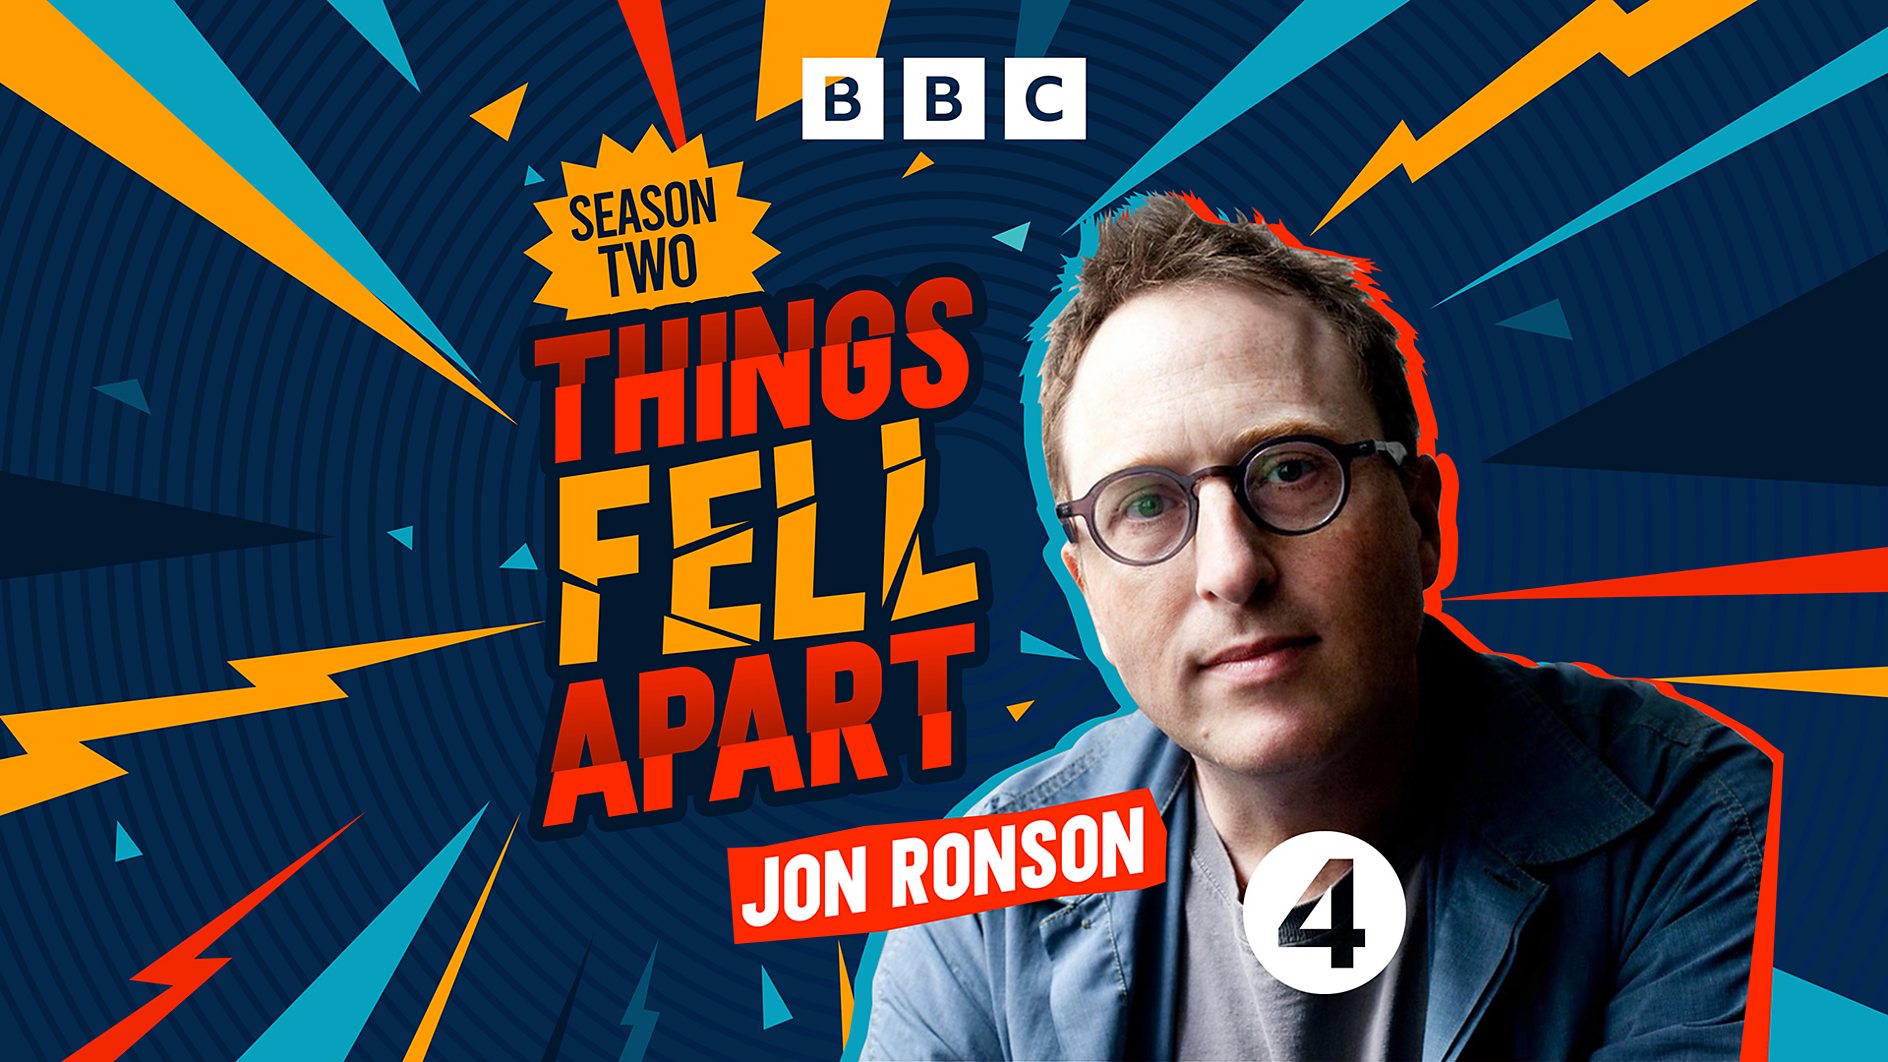 Jon Ronson returns in BBC Radio 4’s Things Fell Apart Season 2  on January 9